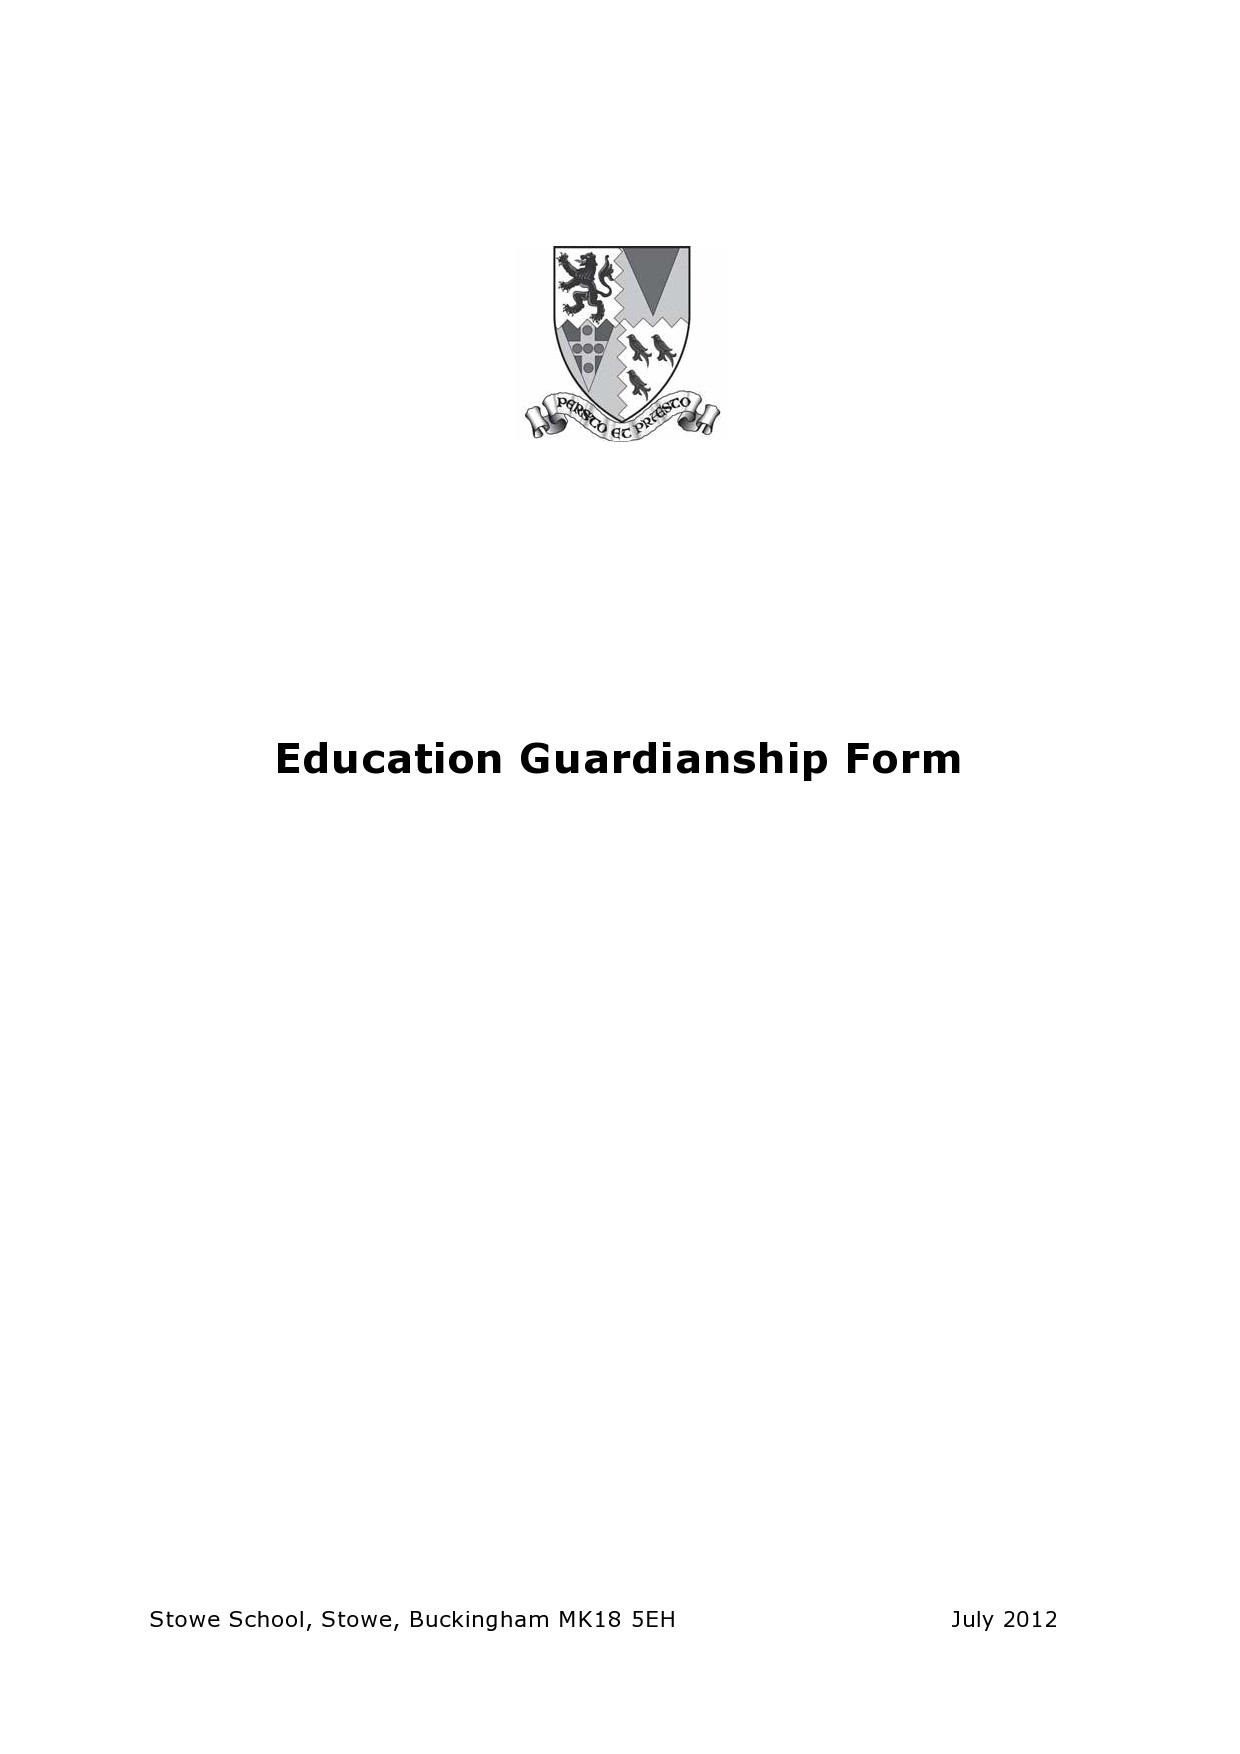 Free guardianship form 25